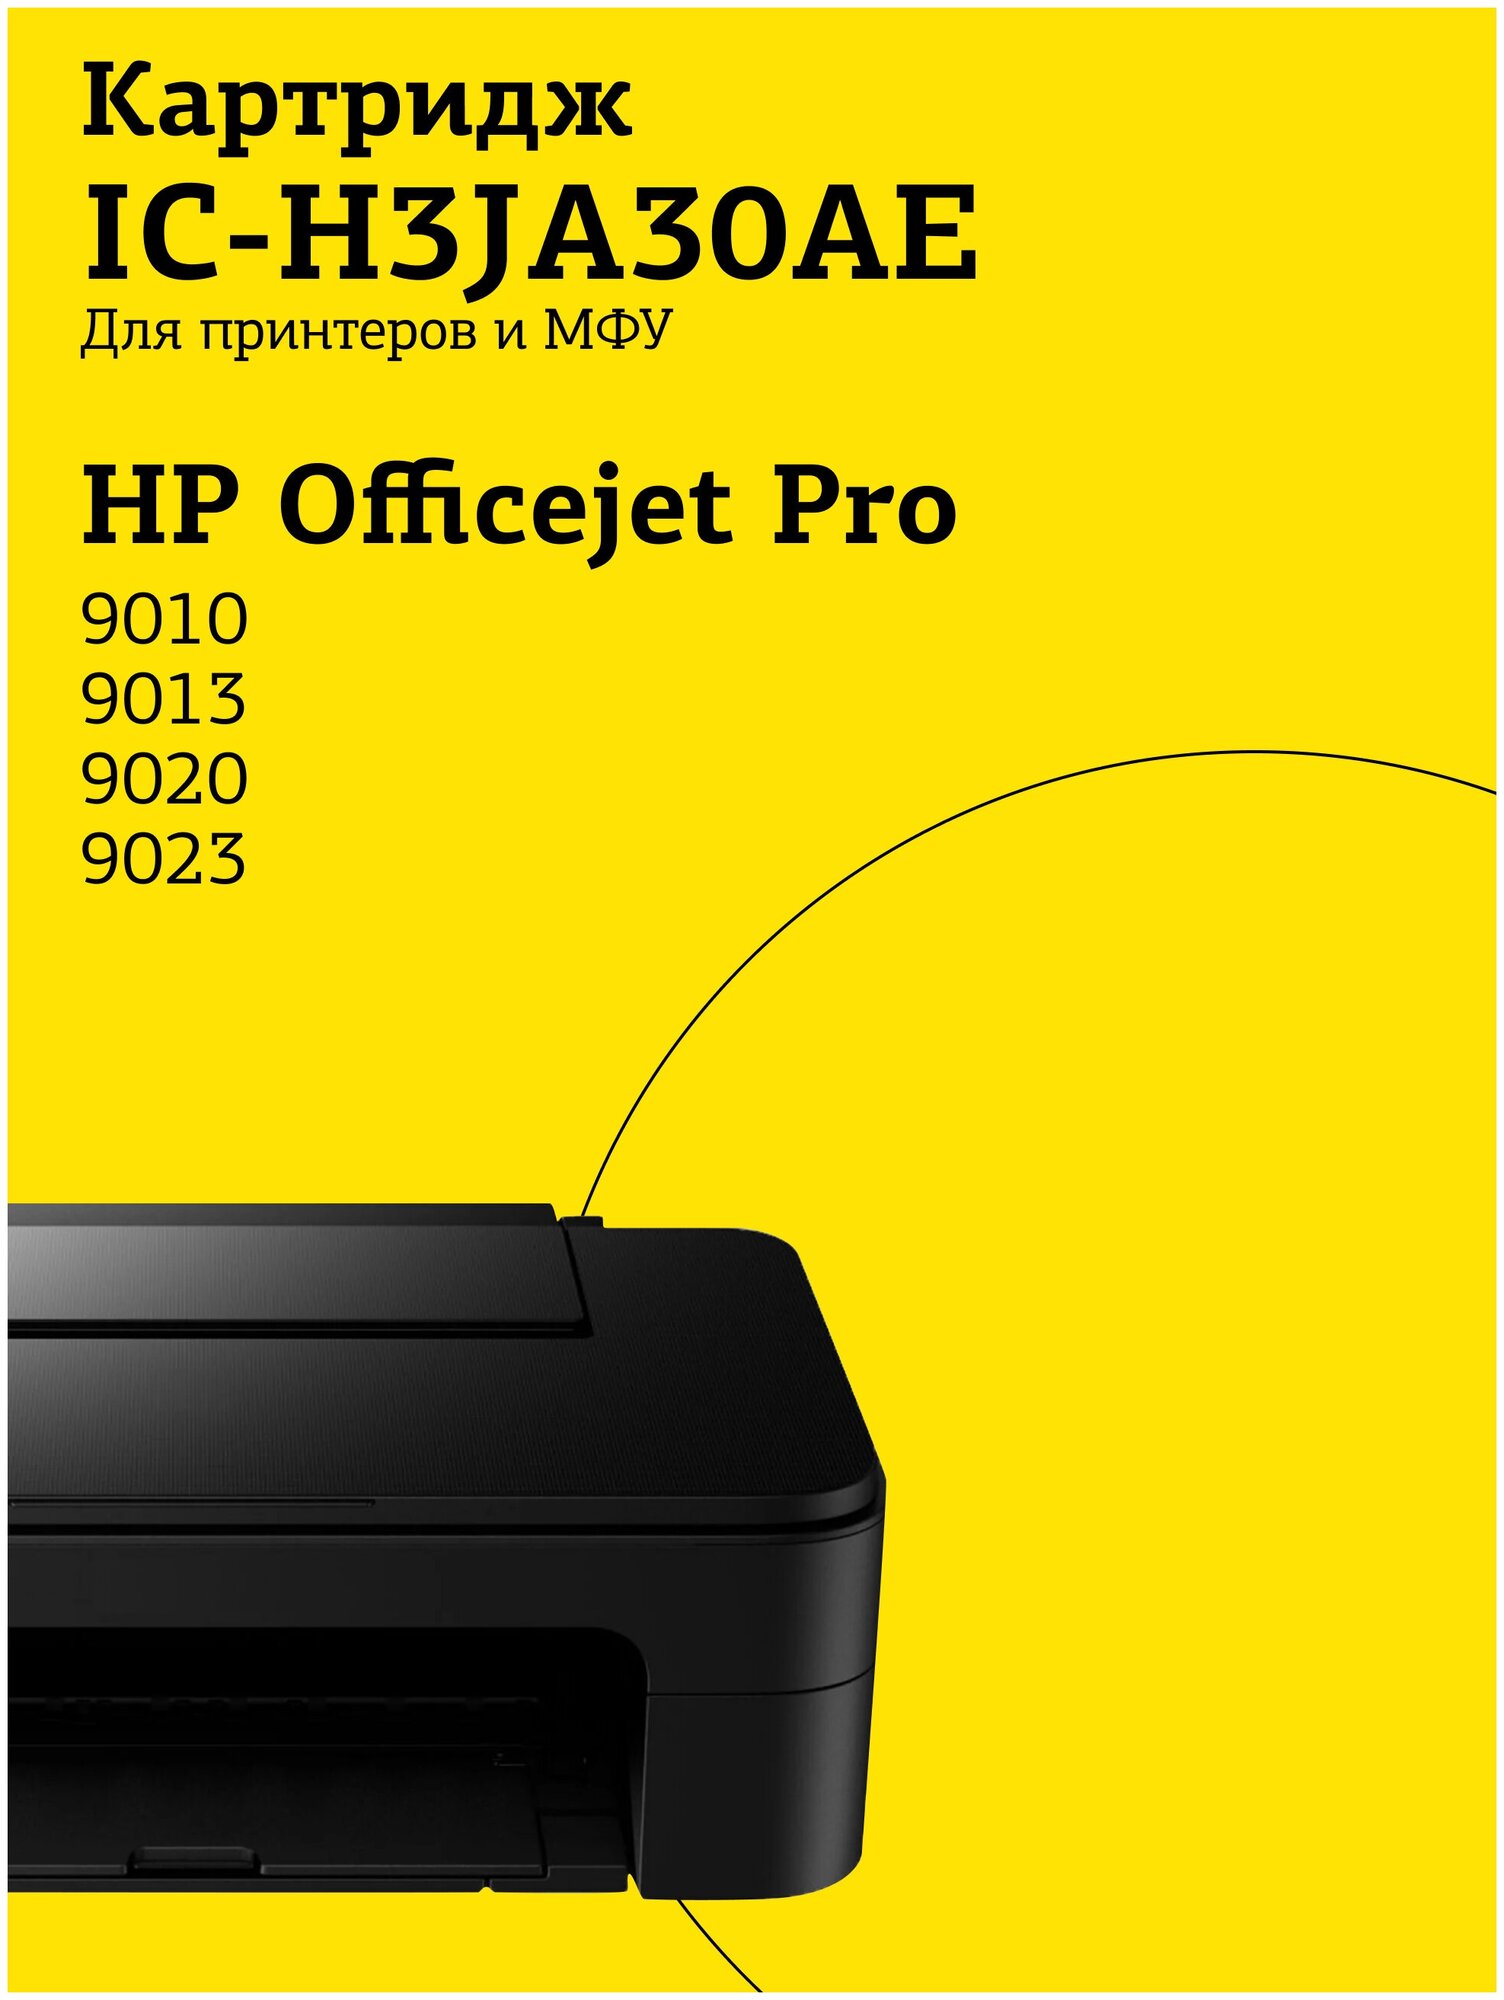 Струйный картридж T2 IC-H3JA30AE №963XL (Officejet Pro 9010/9013/9020/9023) для HP, черный